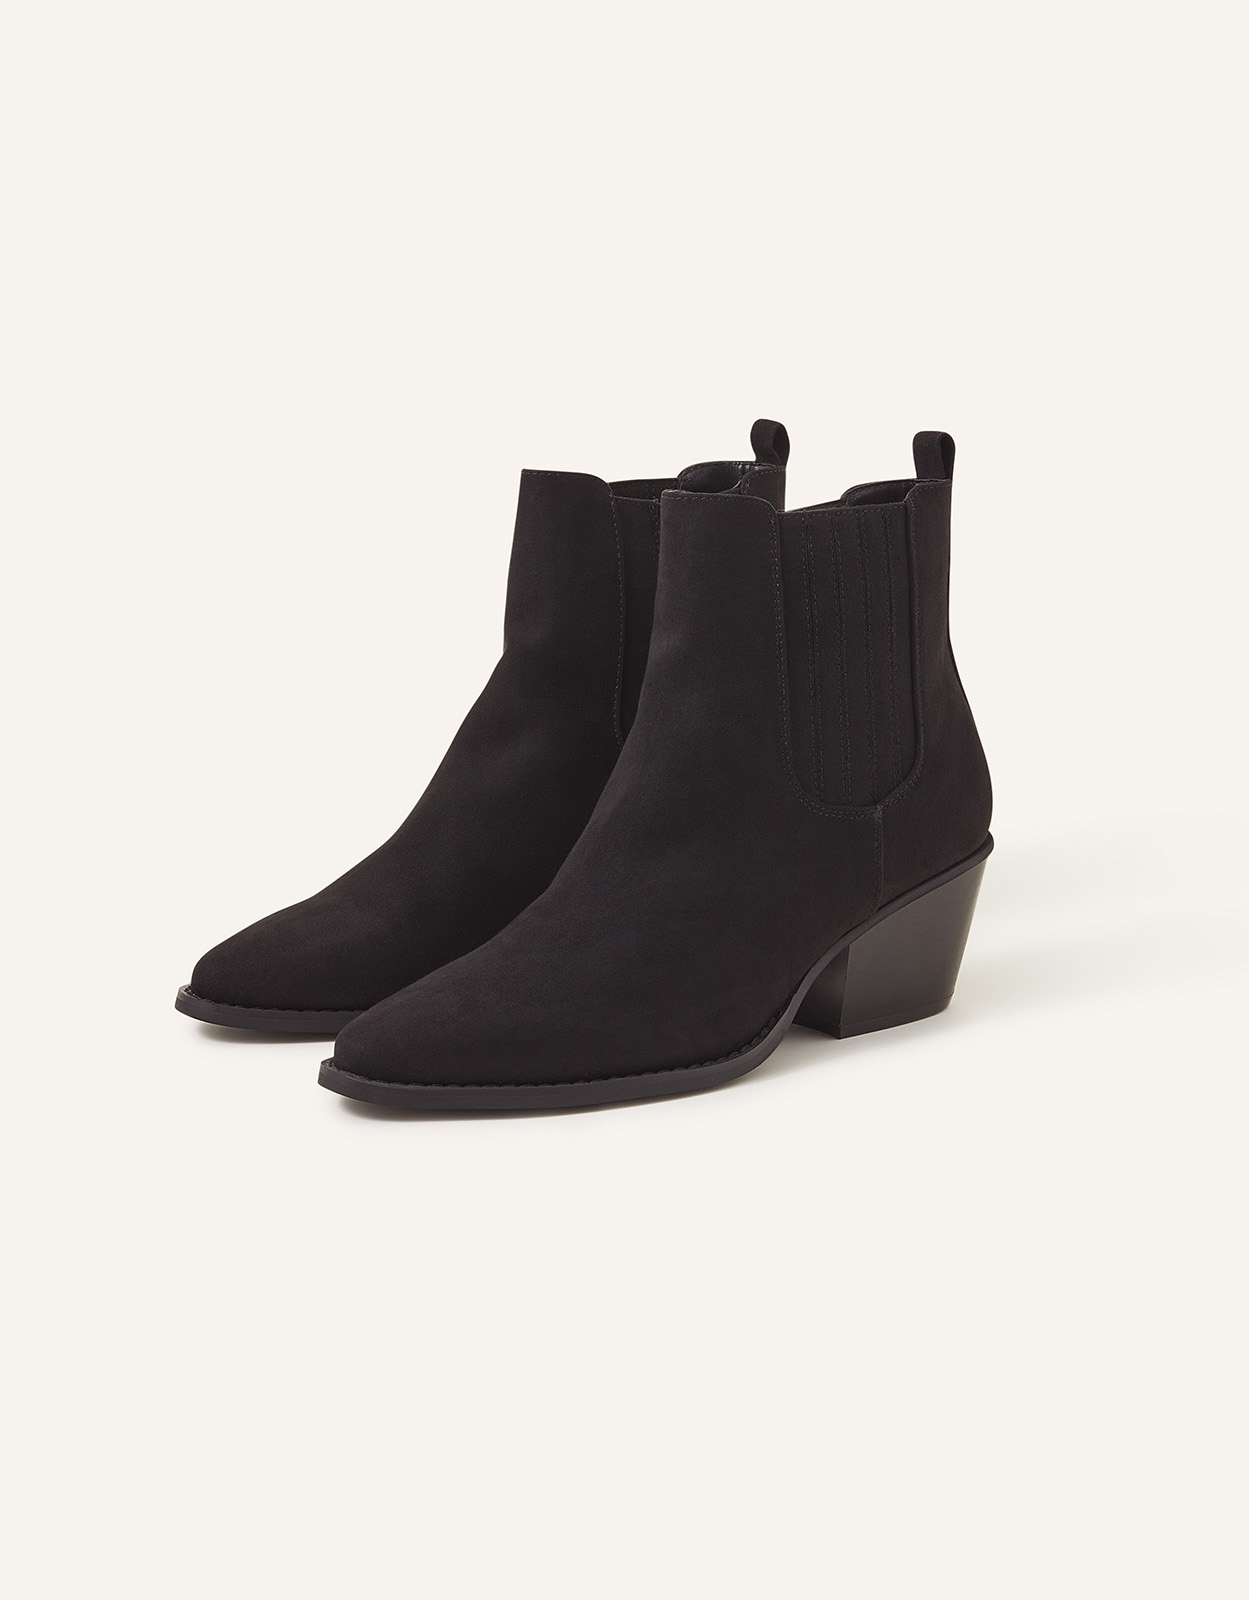 Accessorize Women's Western Boots Black, Size: 39